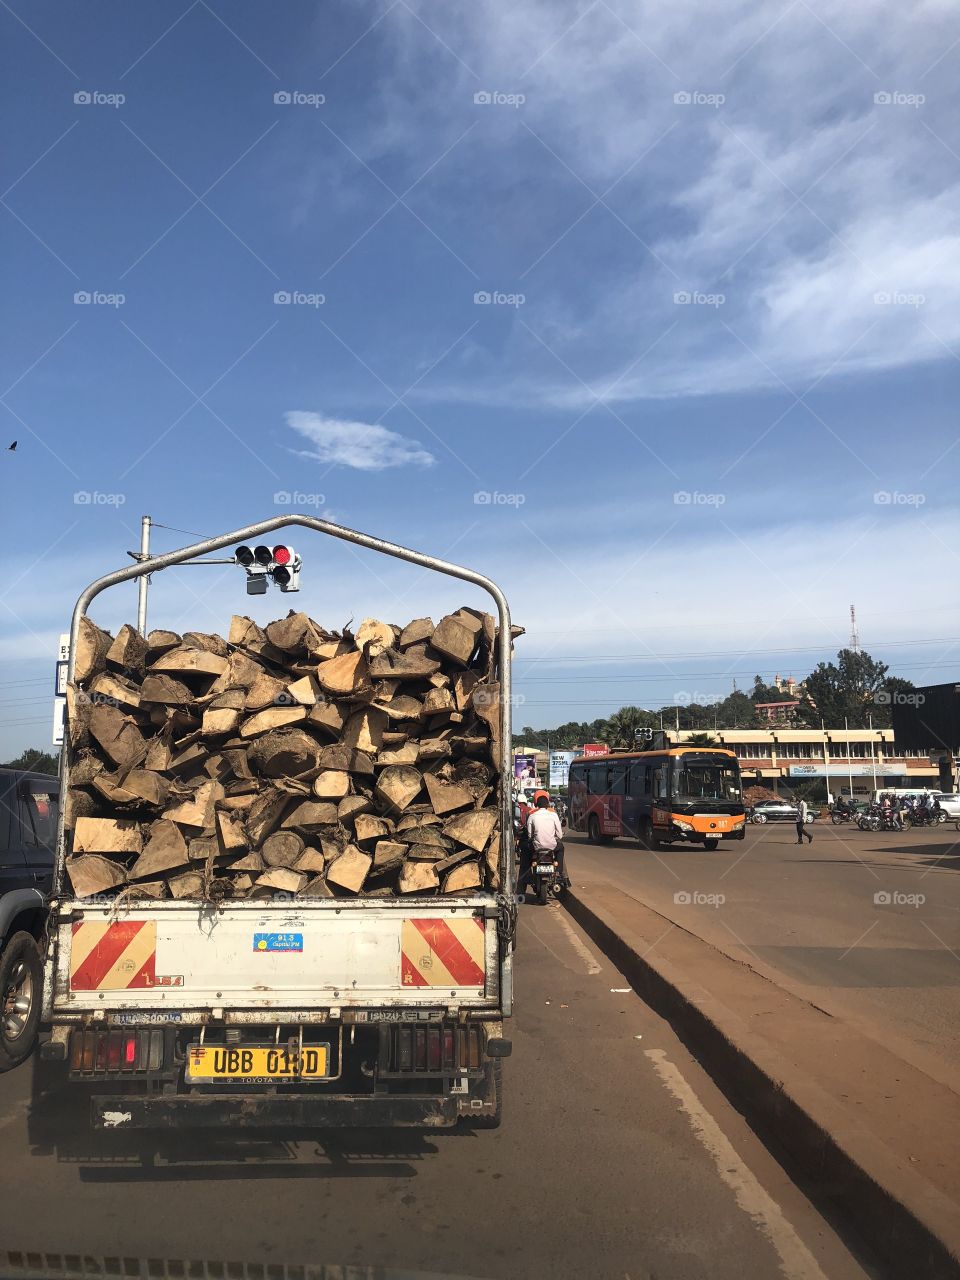 Best African hood . Timber , Uganda hood . Uganda pick up . UBB number plate in Uganda is new . The sky is so blue in Uganda today 